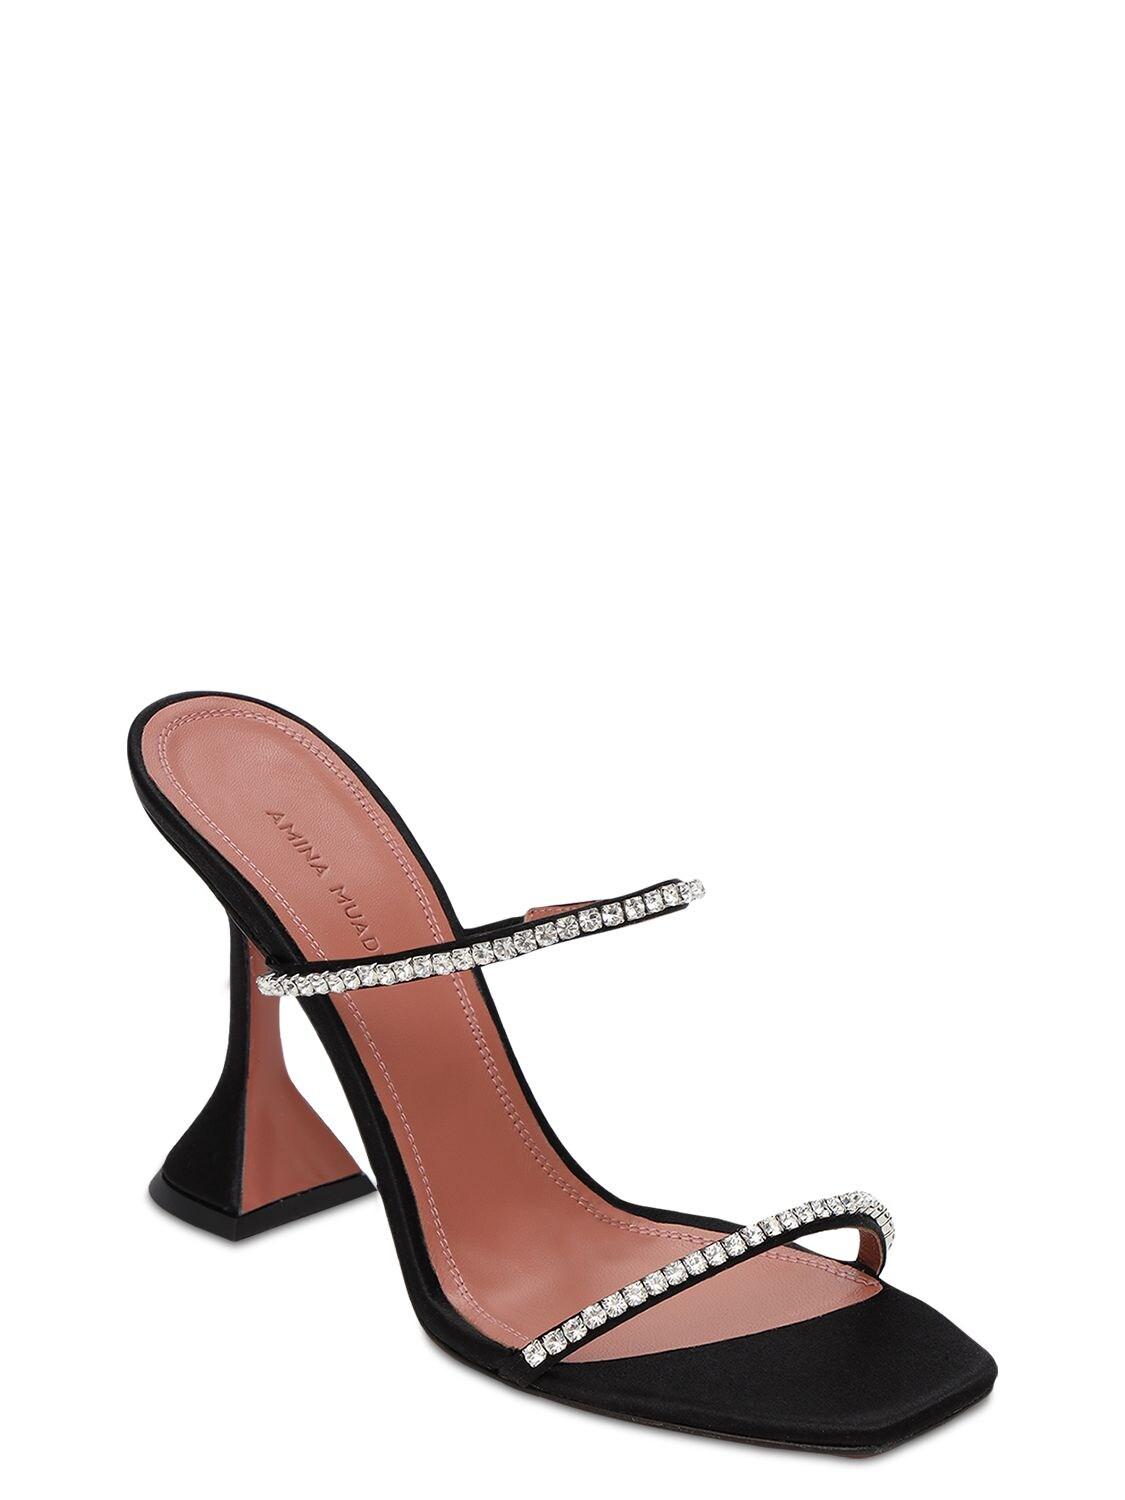 AMINA MUADDI 95mm Gilda Embellished Satin Sandals in Black | Lyst